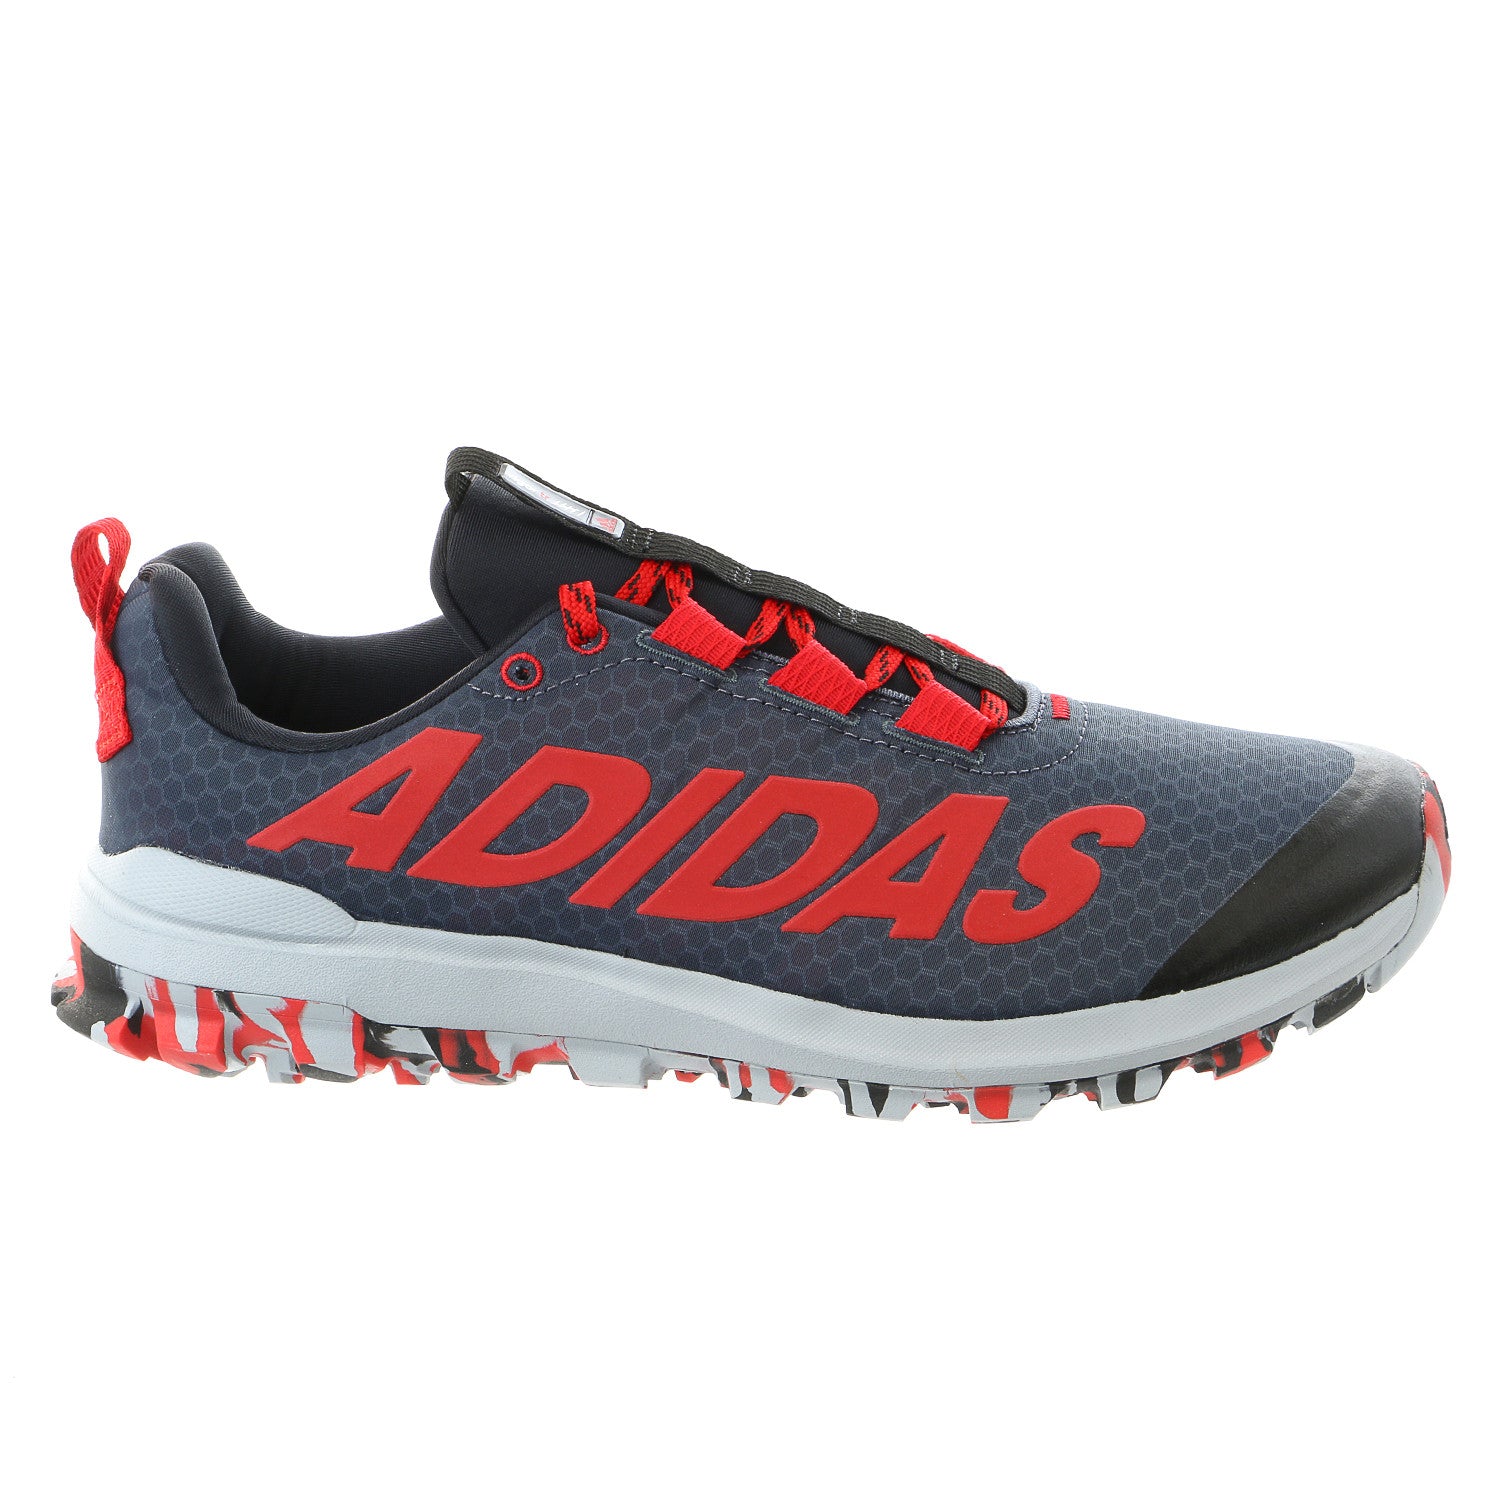 Vigor 6 TR Trail Running Sneaker Shoe - Black/Red/Light Grey - Shoplifestyle